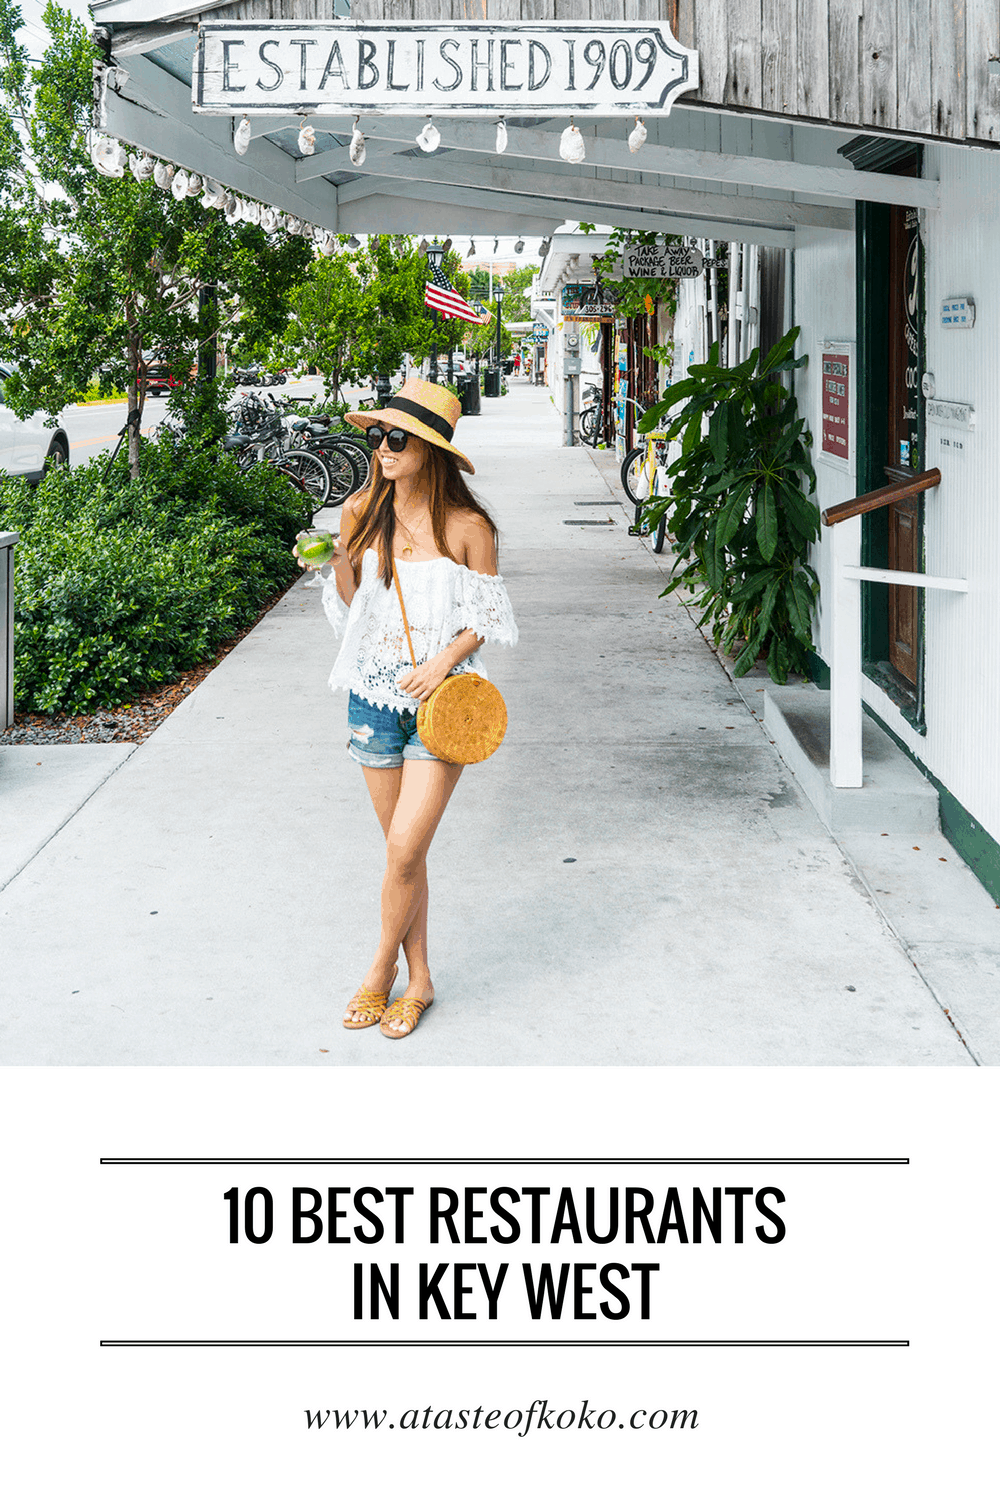 10 Best Restaurants in Key West